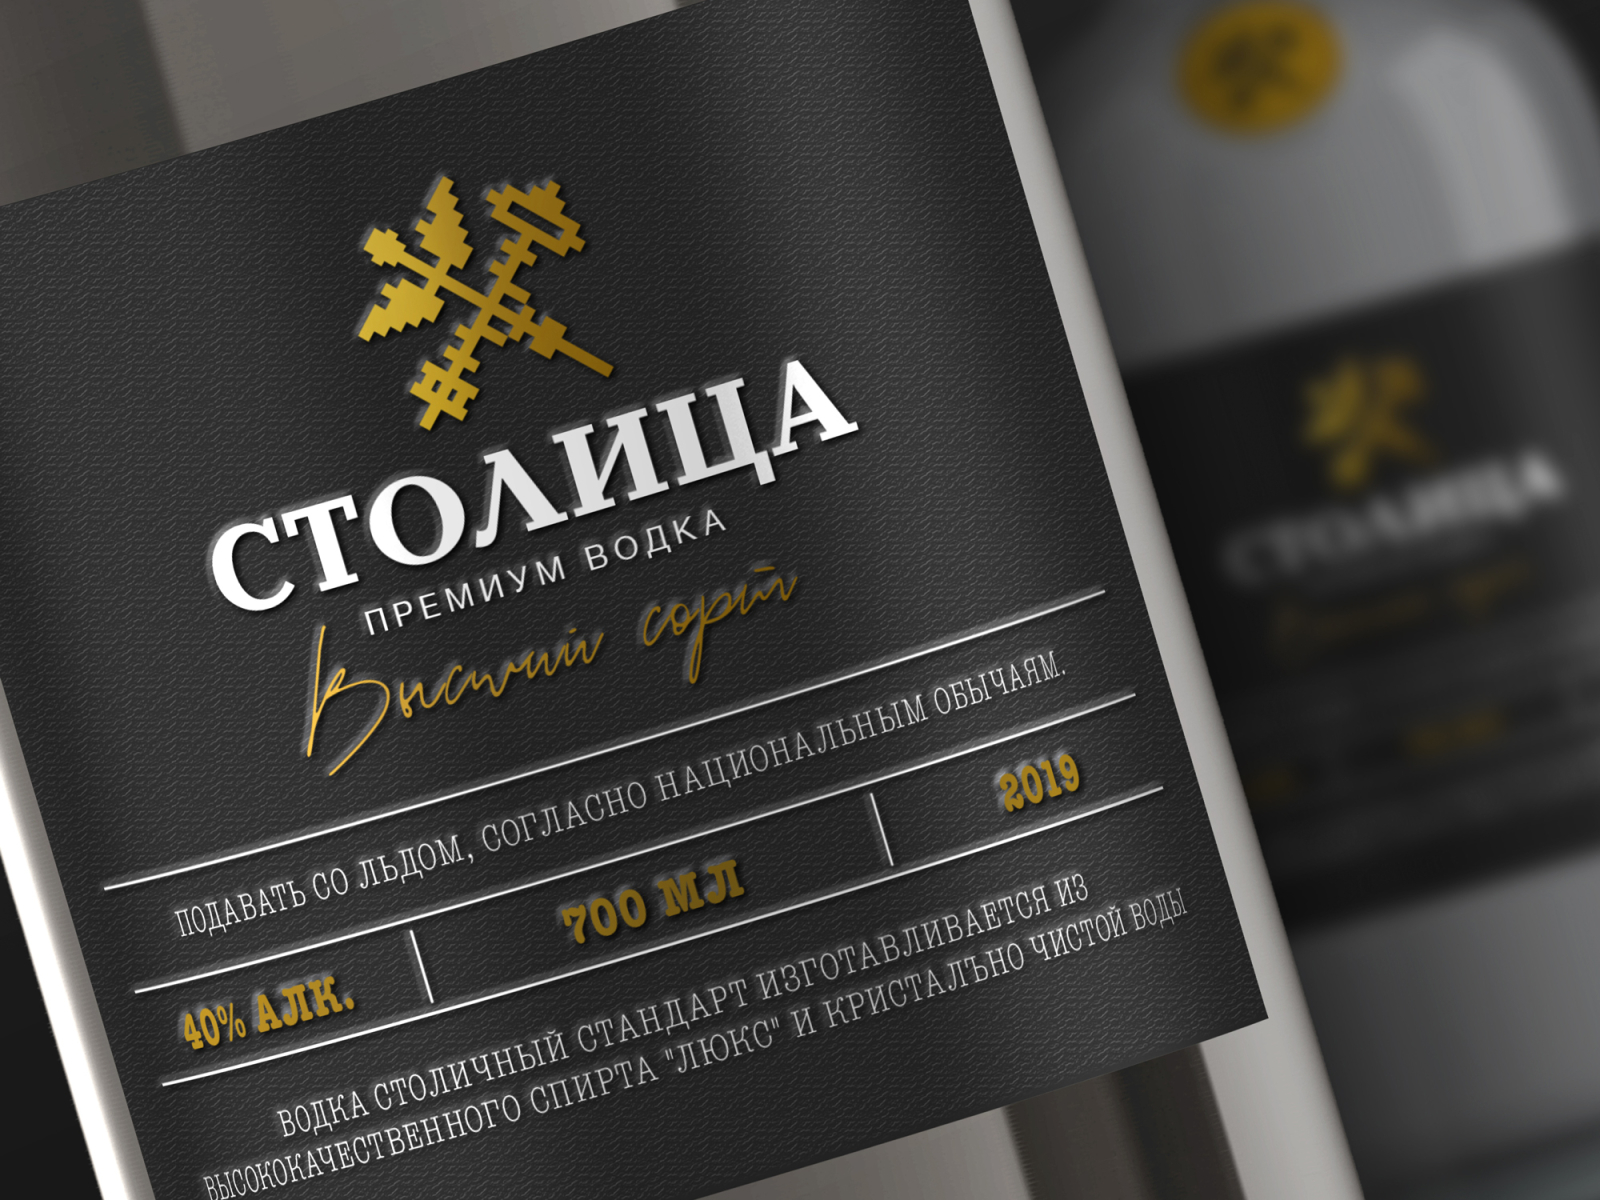 Russian quality vodka - tops